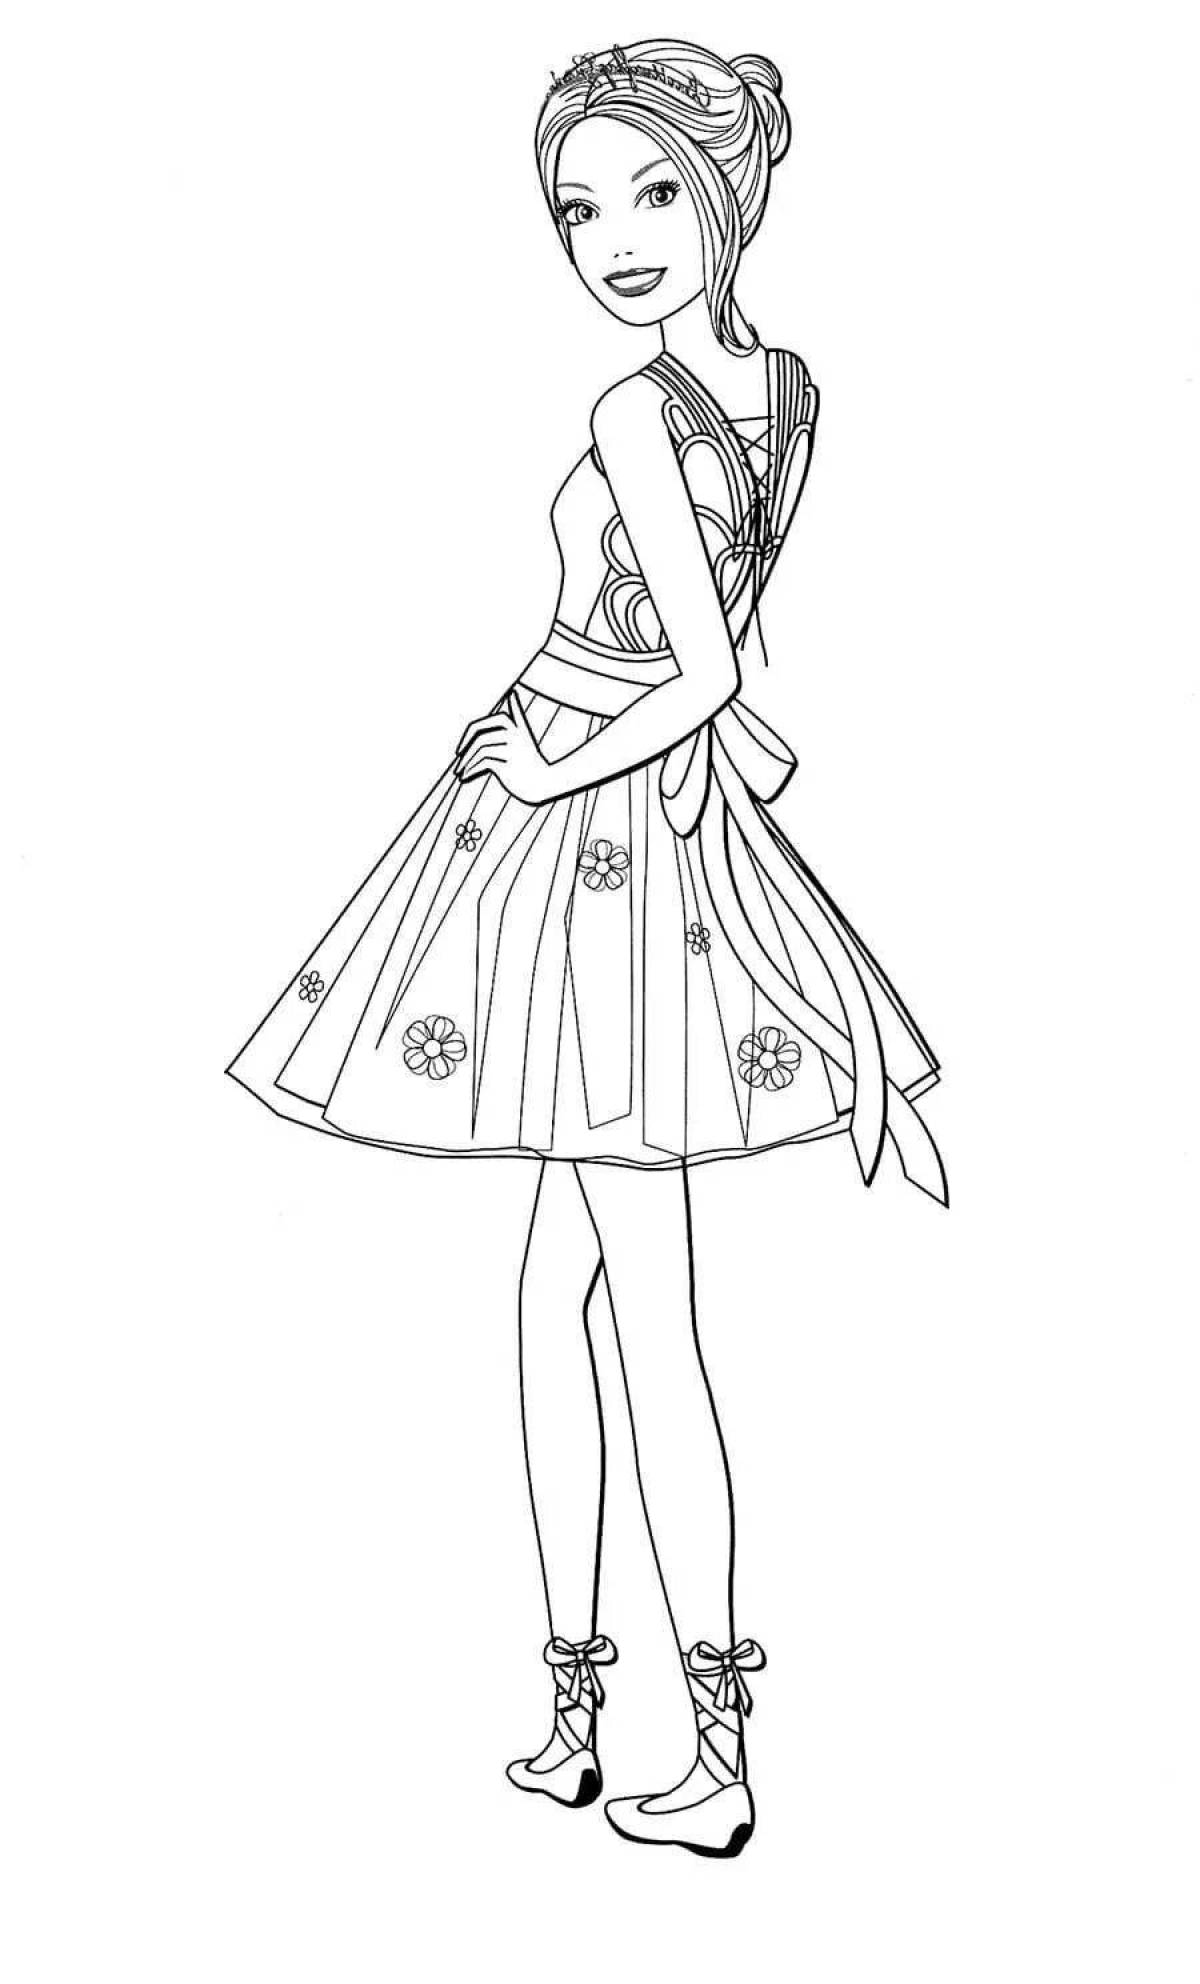 Royal coloring girl in a long dress